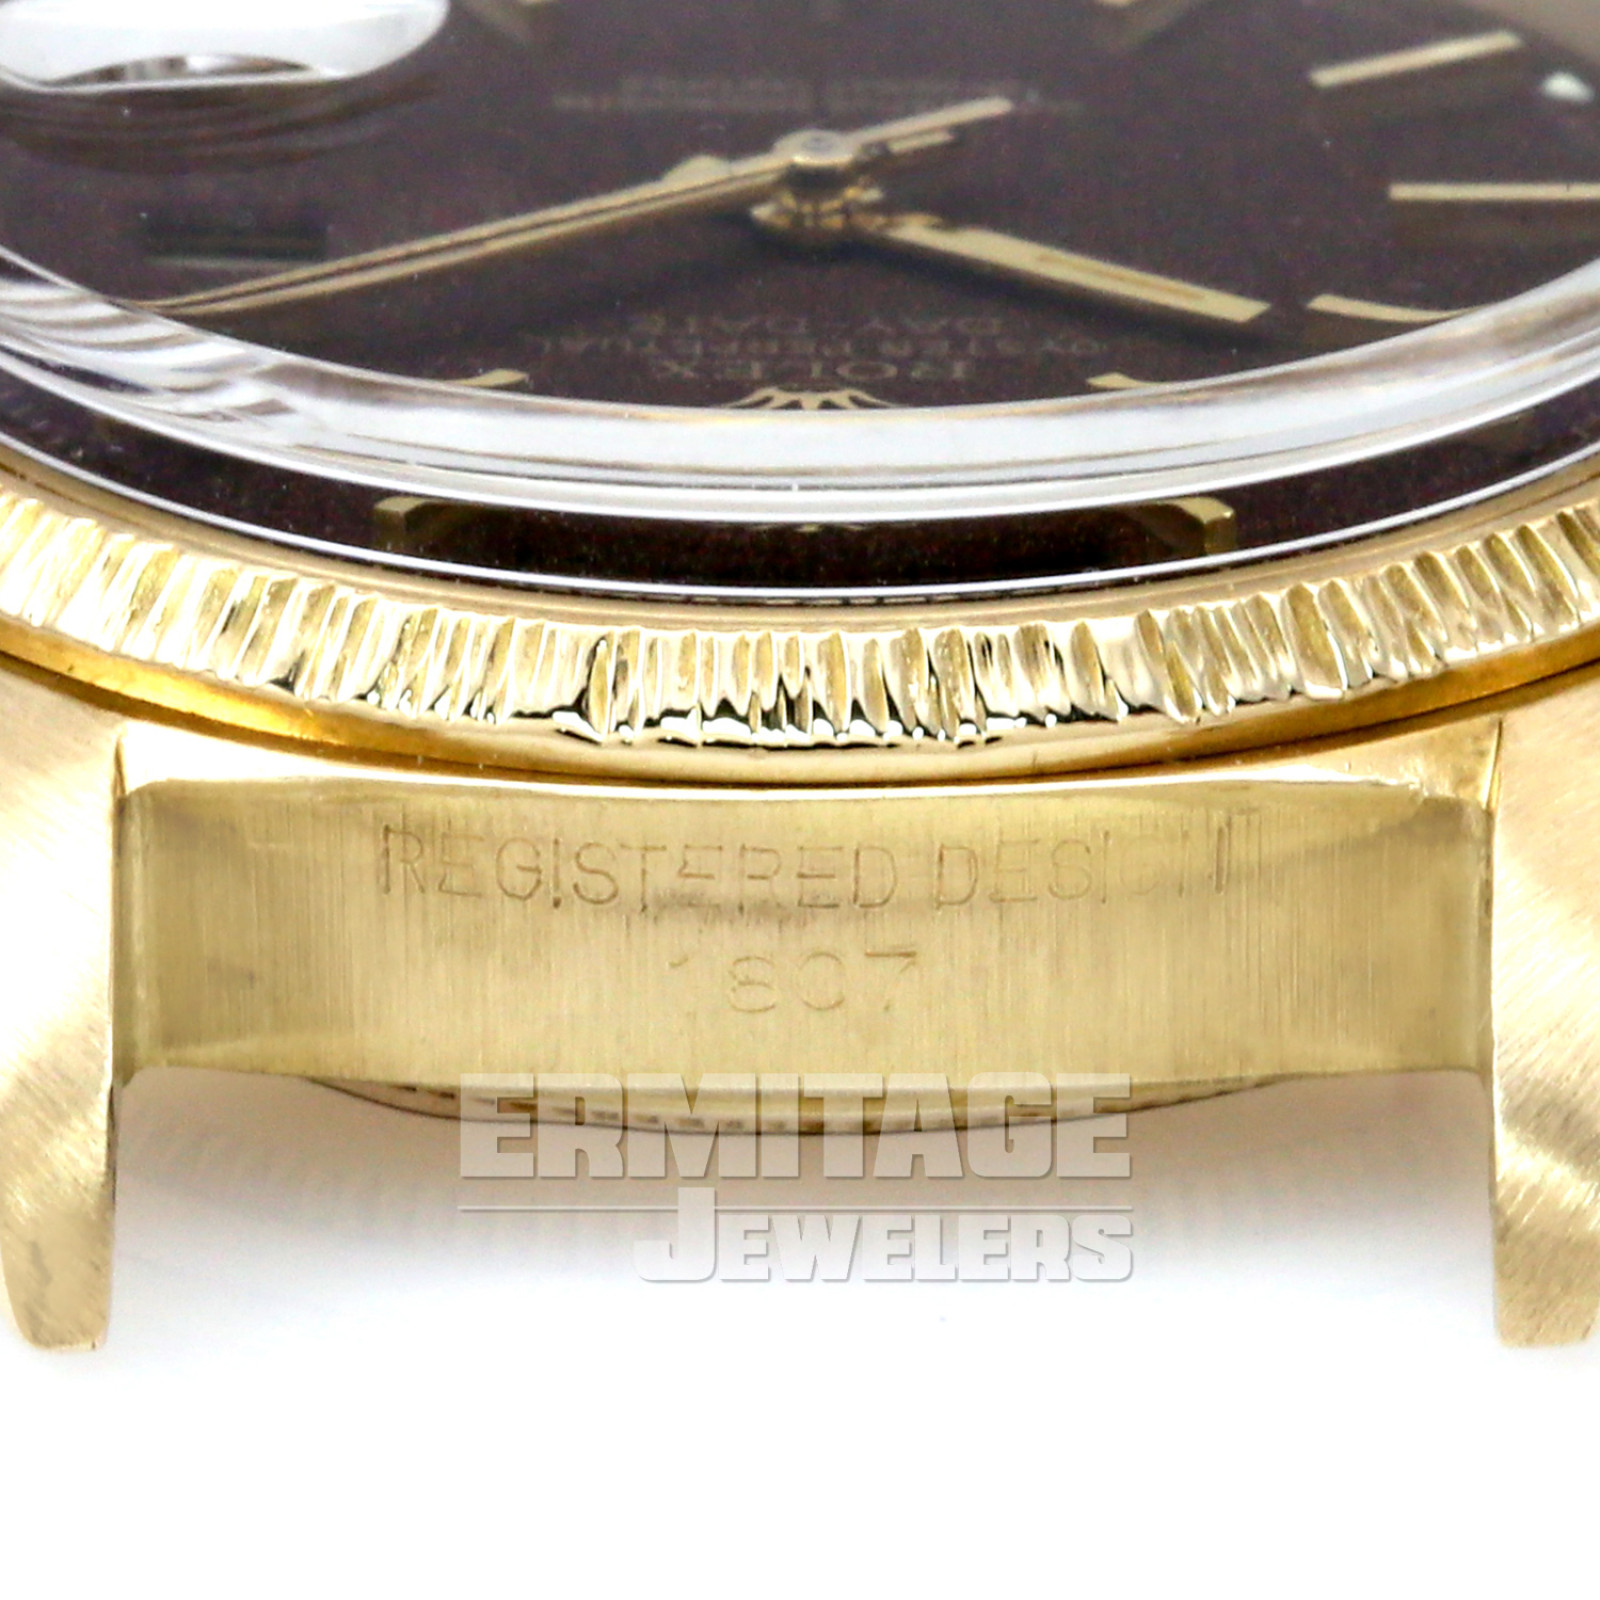 Vintage Rolex 1807 36 mm Yellow Gold on President, Bark Finish Bezel